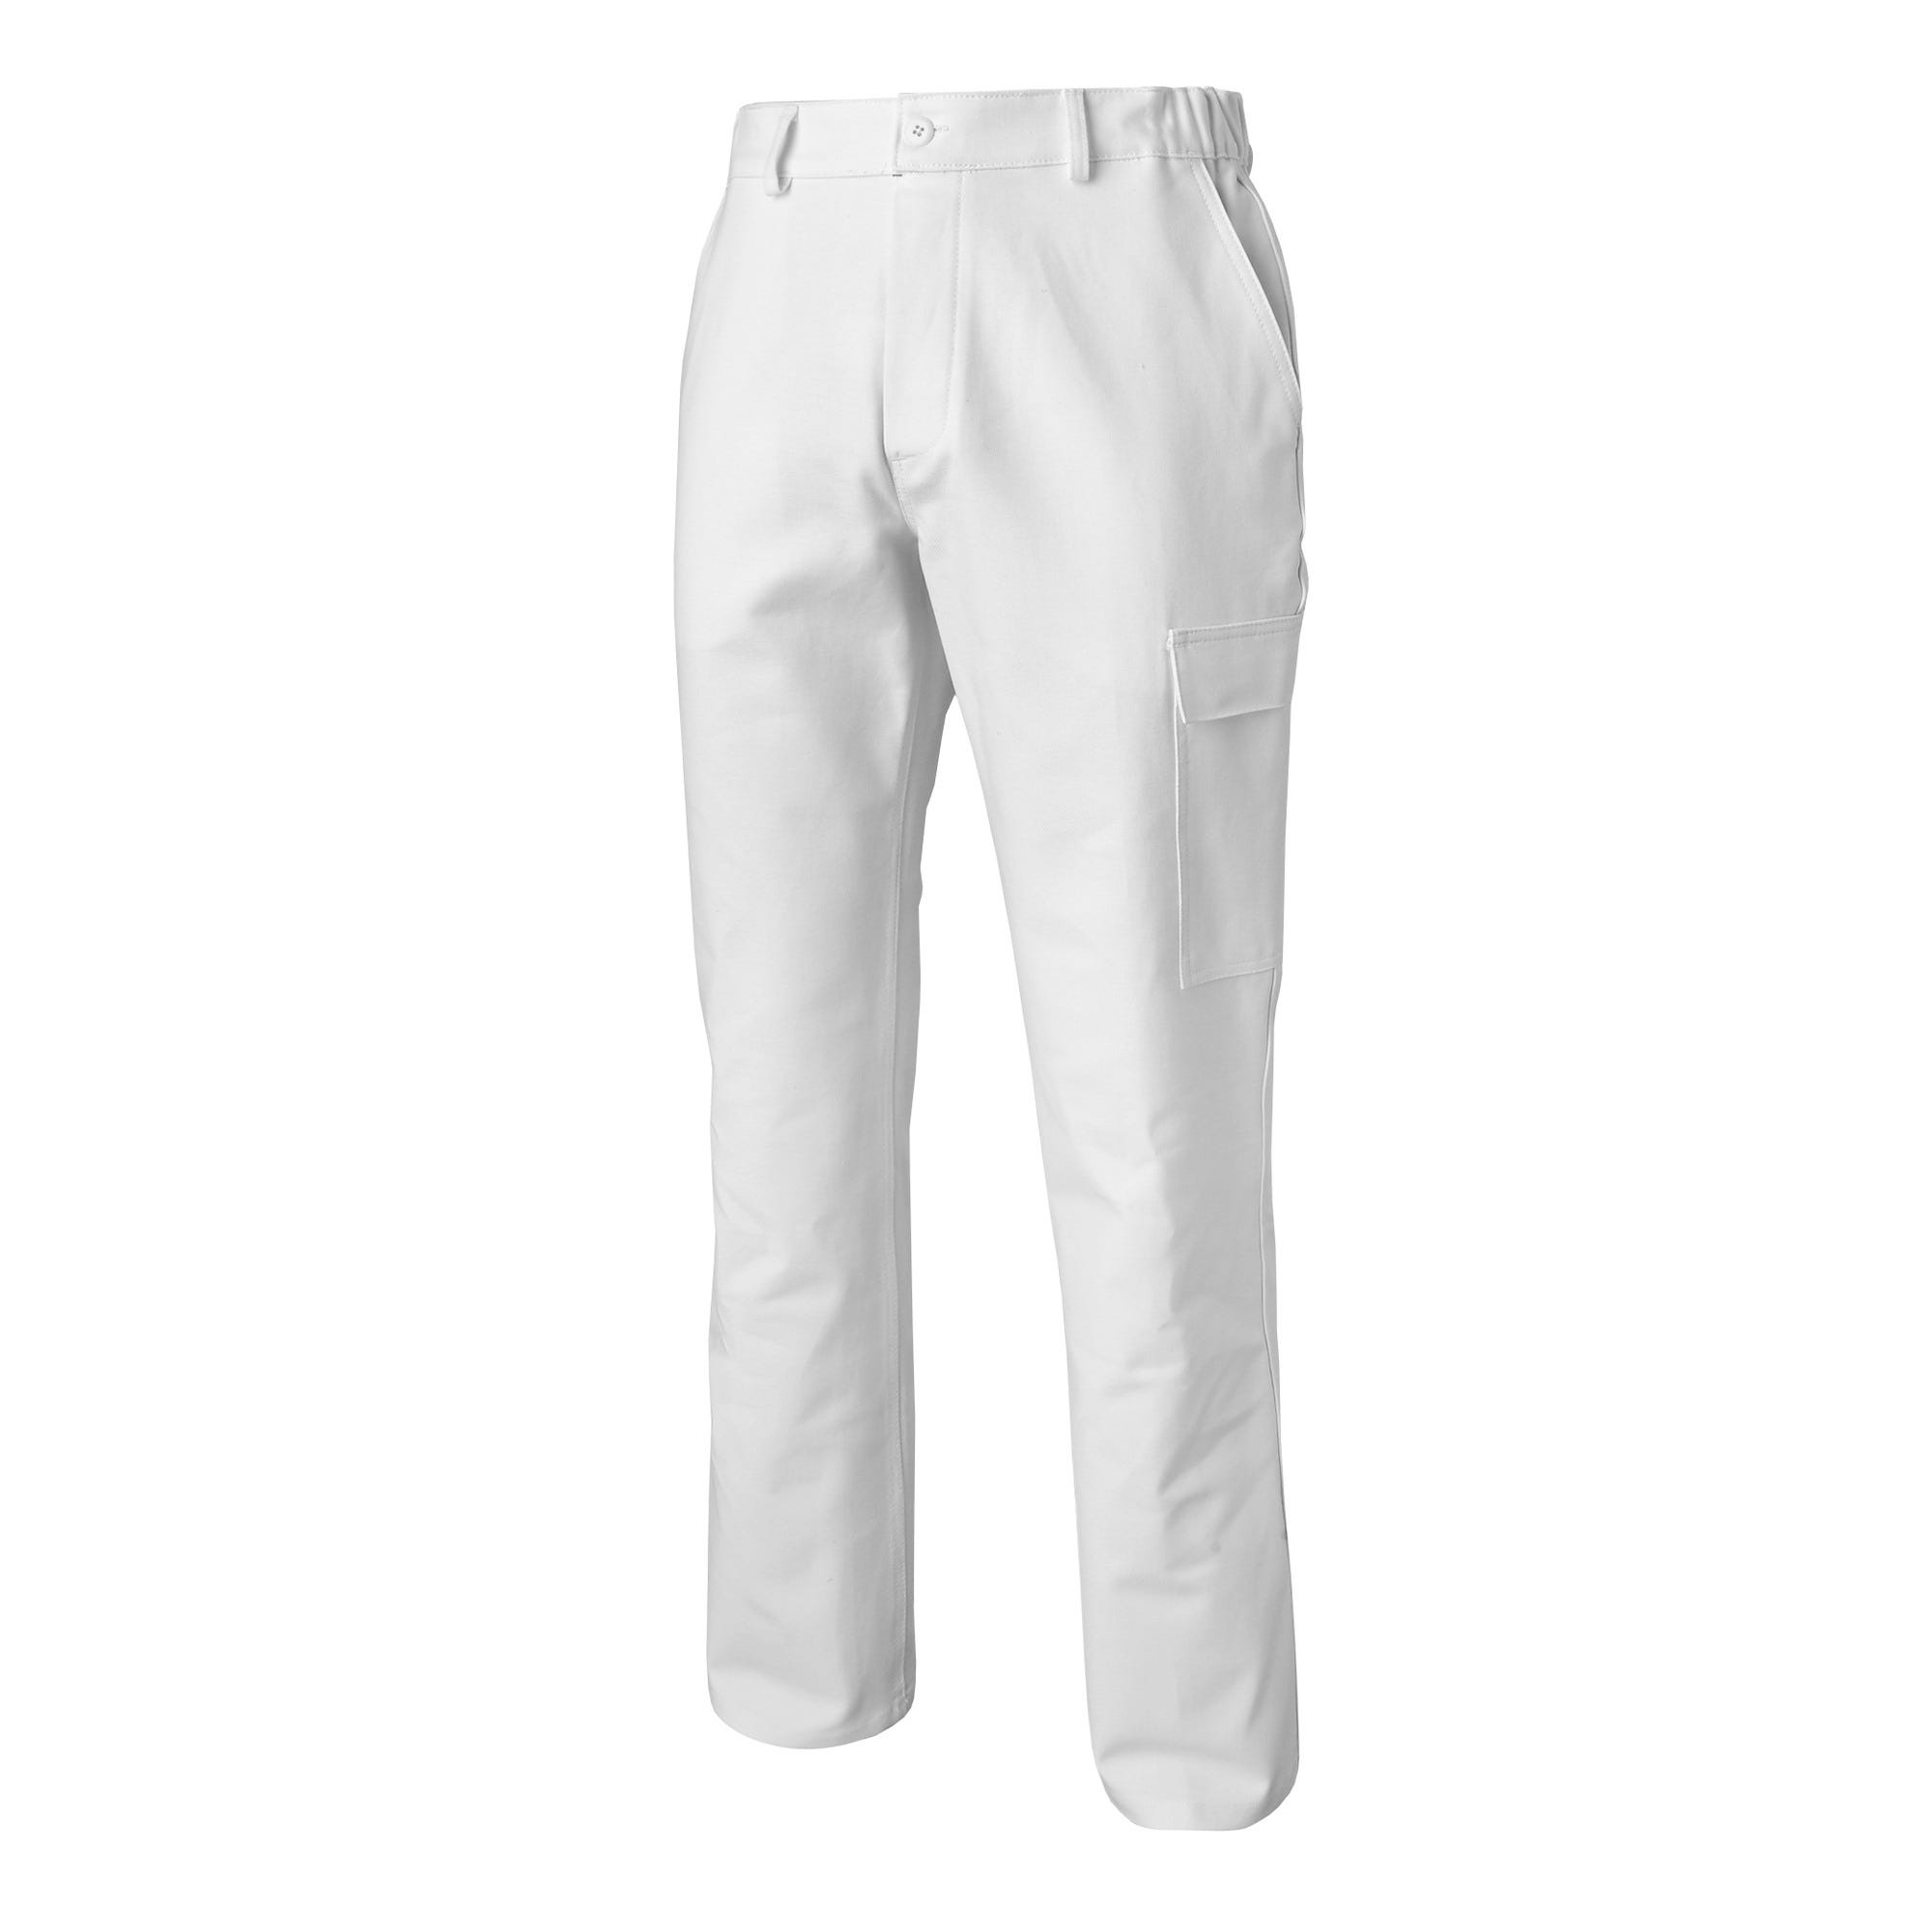 Pantalon de travail Blanc T.3 New pilote - MOLINEL 1